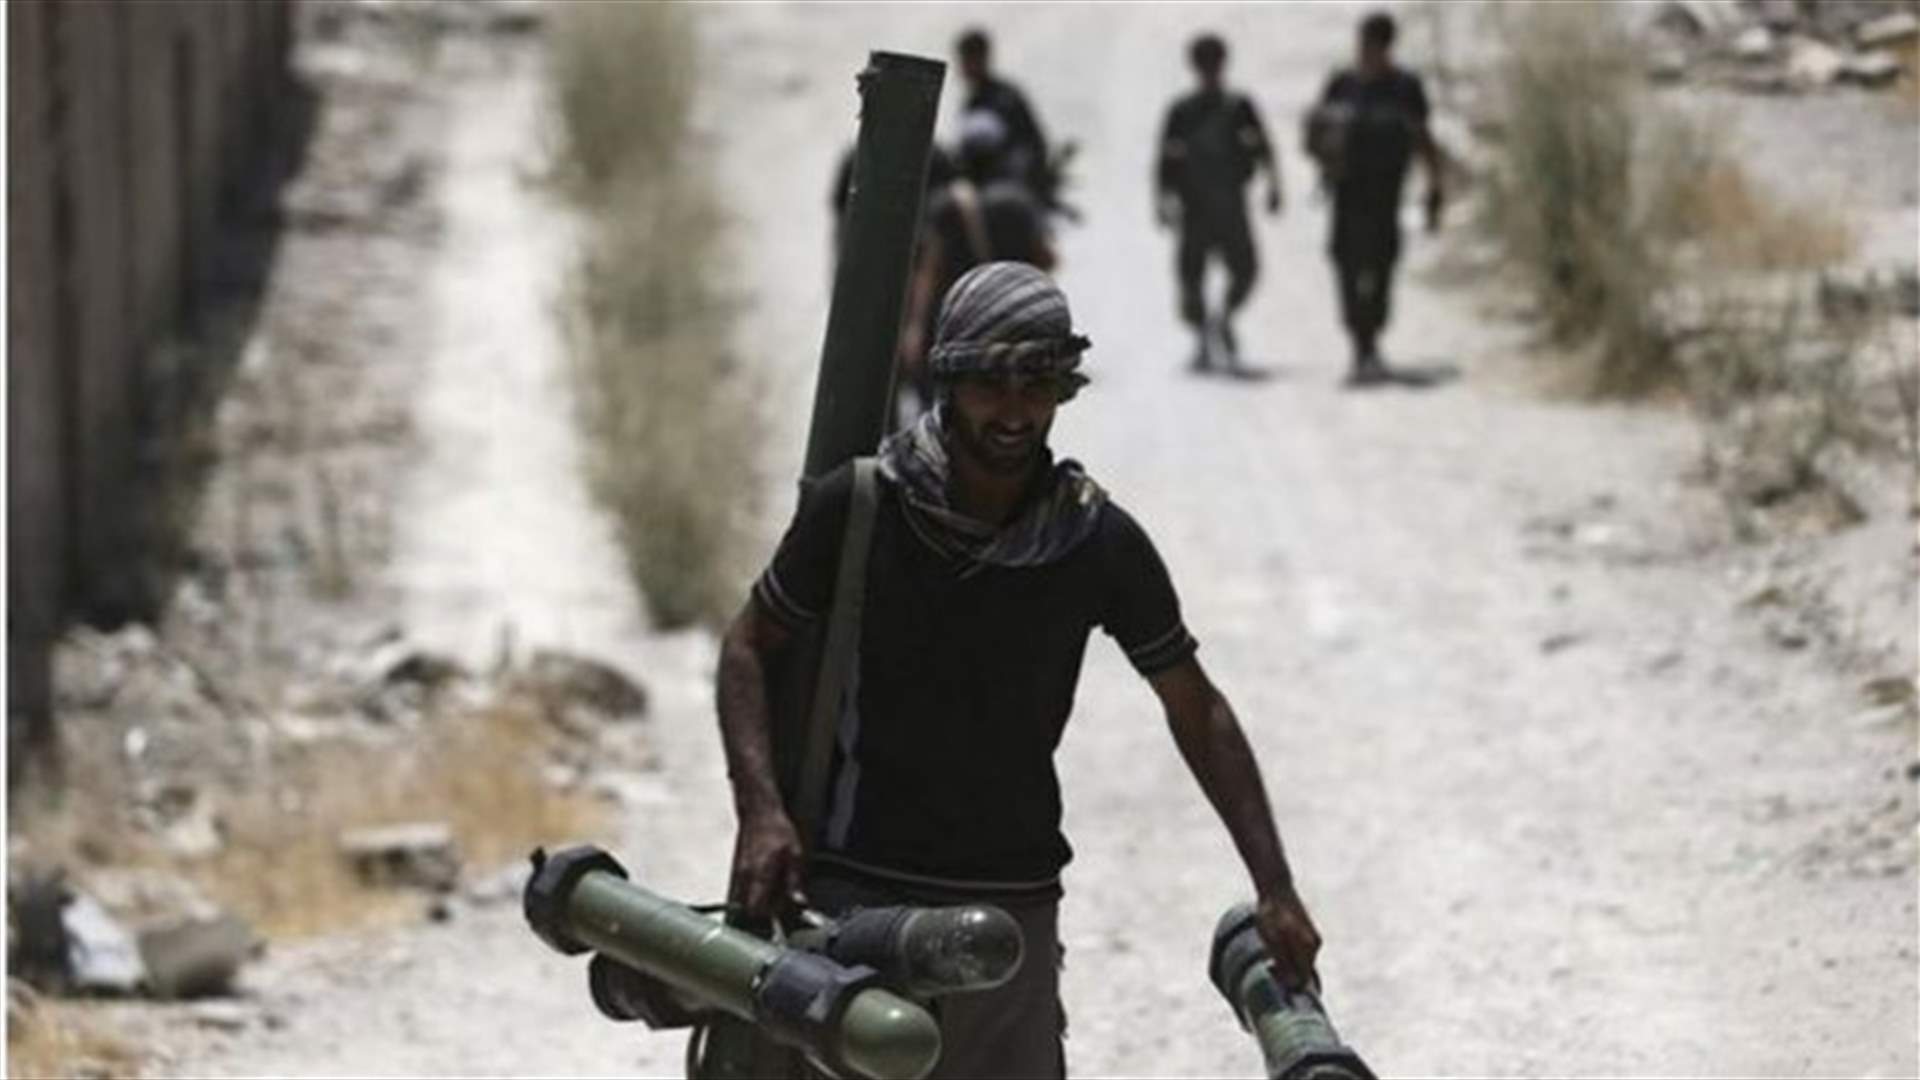 Syrian rebels capture Islamic State headquarters in Manbij -U.S. military